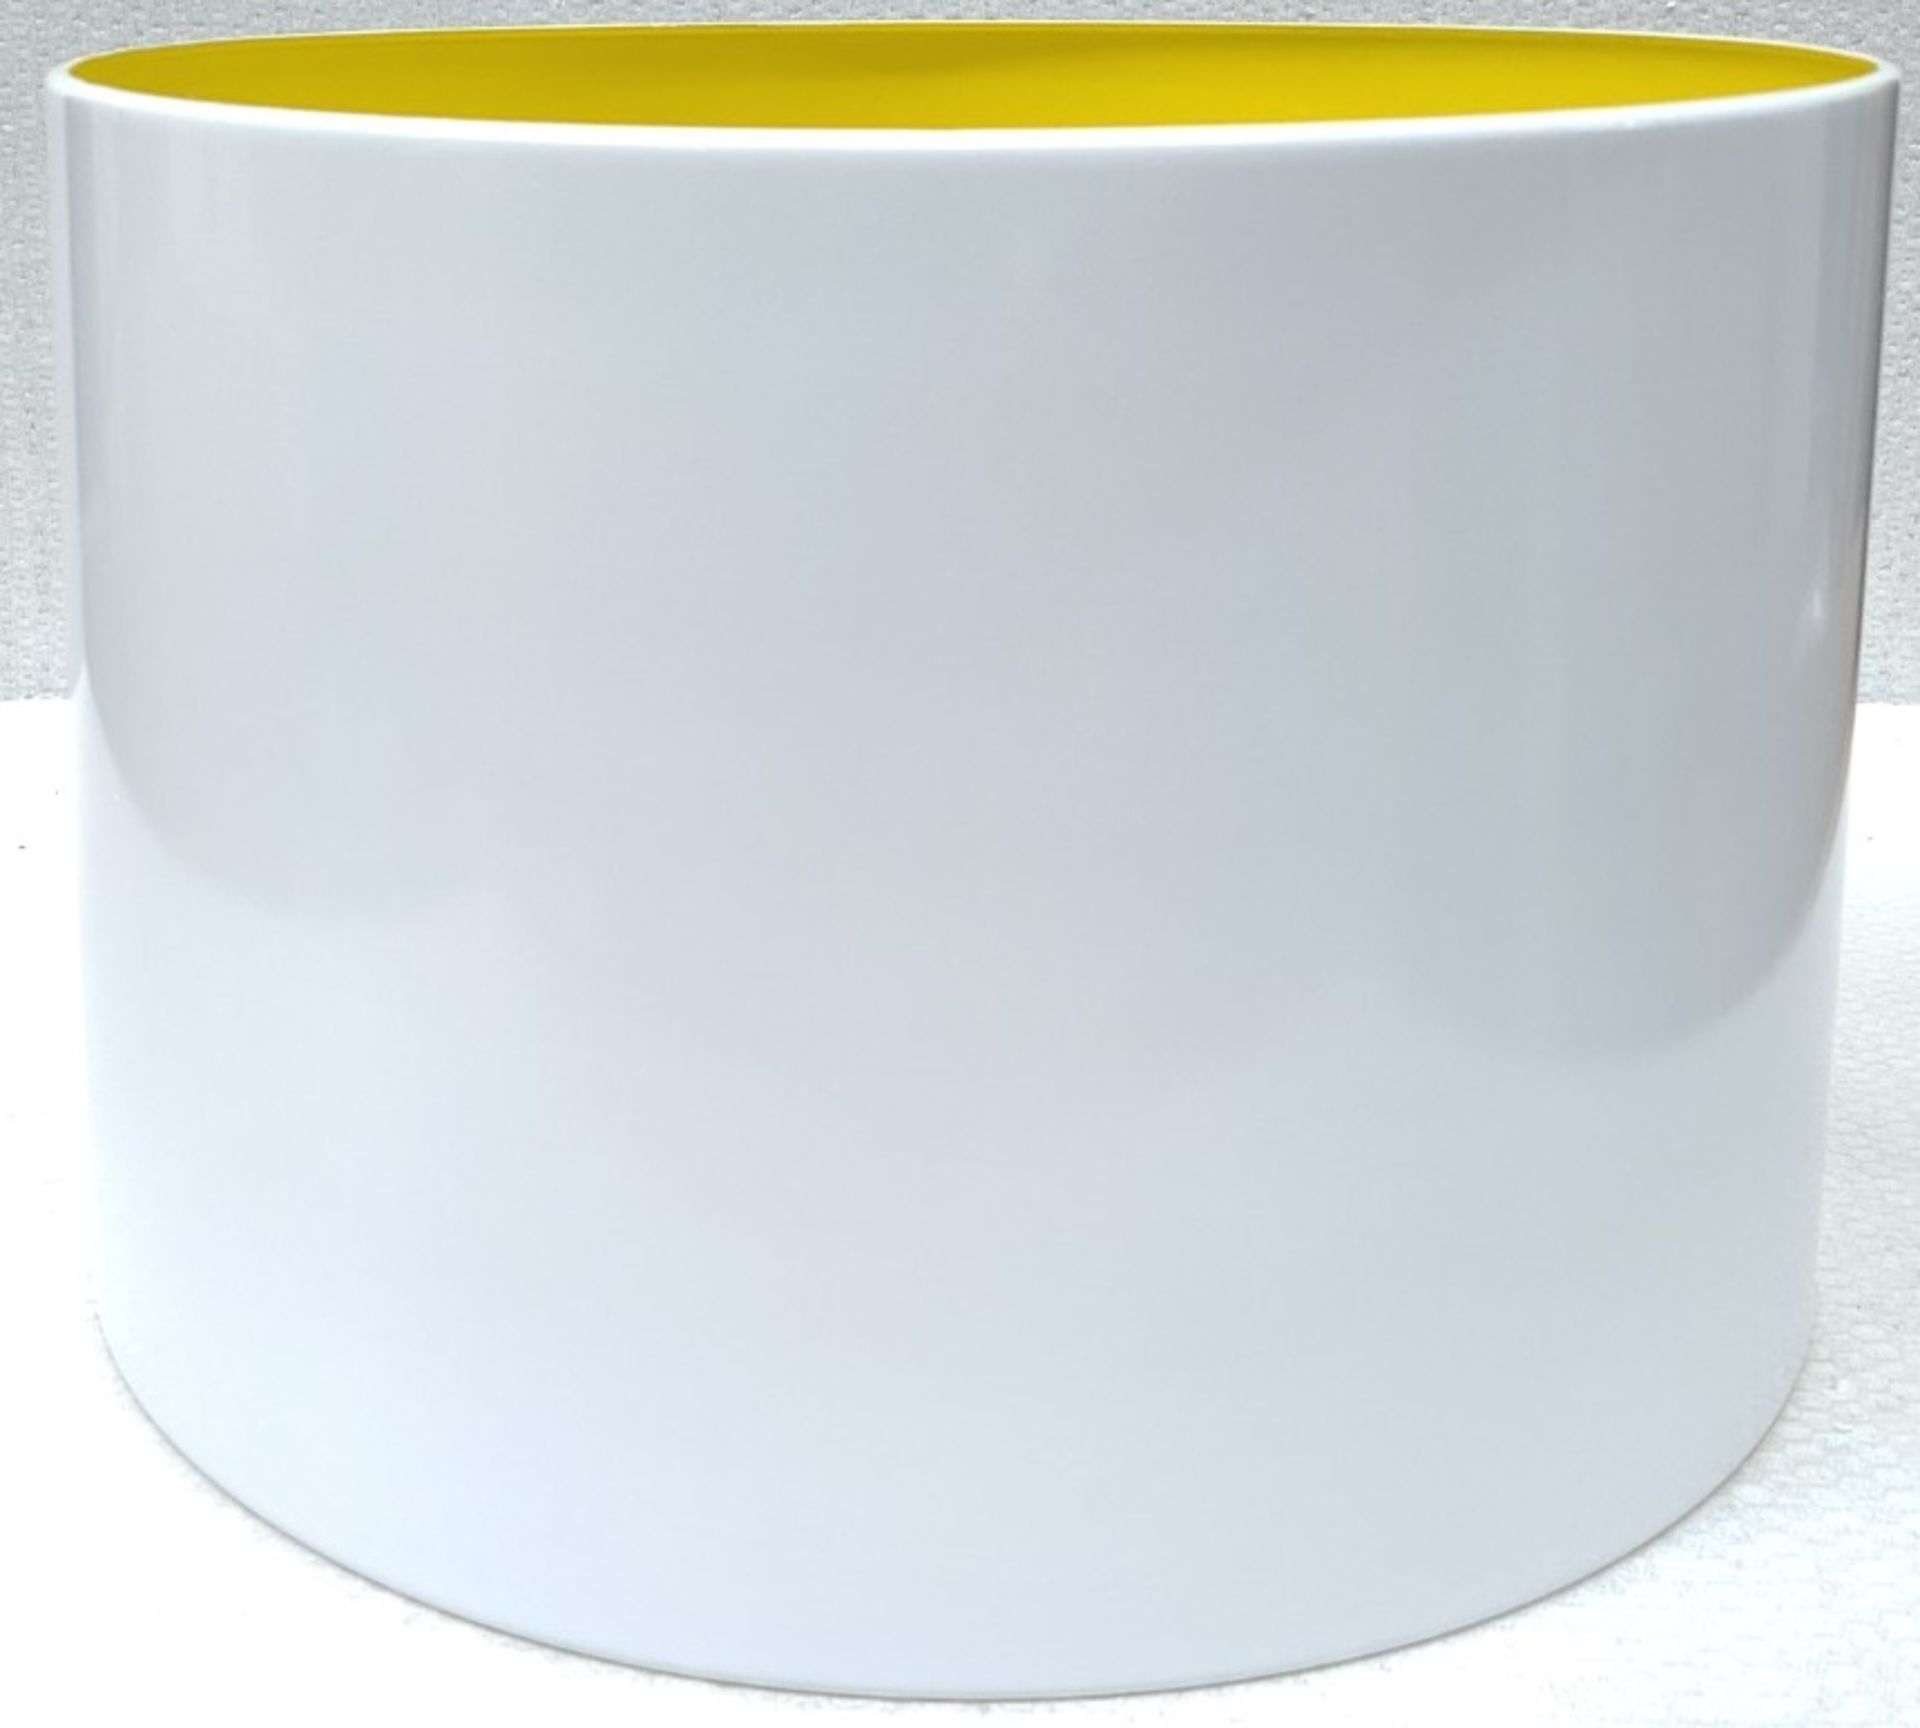 1 x BLUESUNTREE Large Scandi Metal White Pendant Drum Lamp Shape With Bright Yellow Interior 50cm - Image 2 of 5